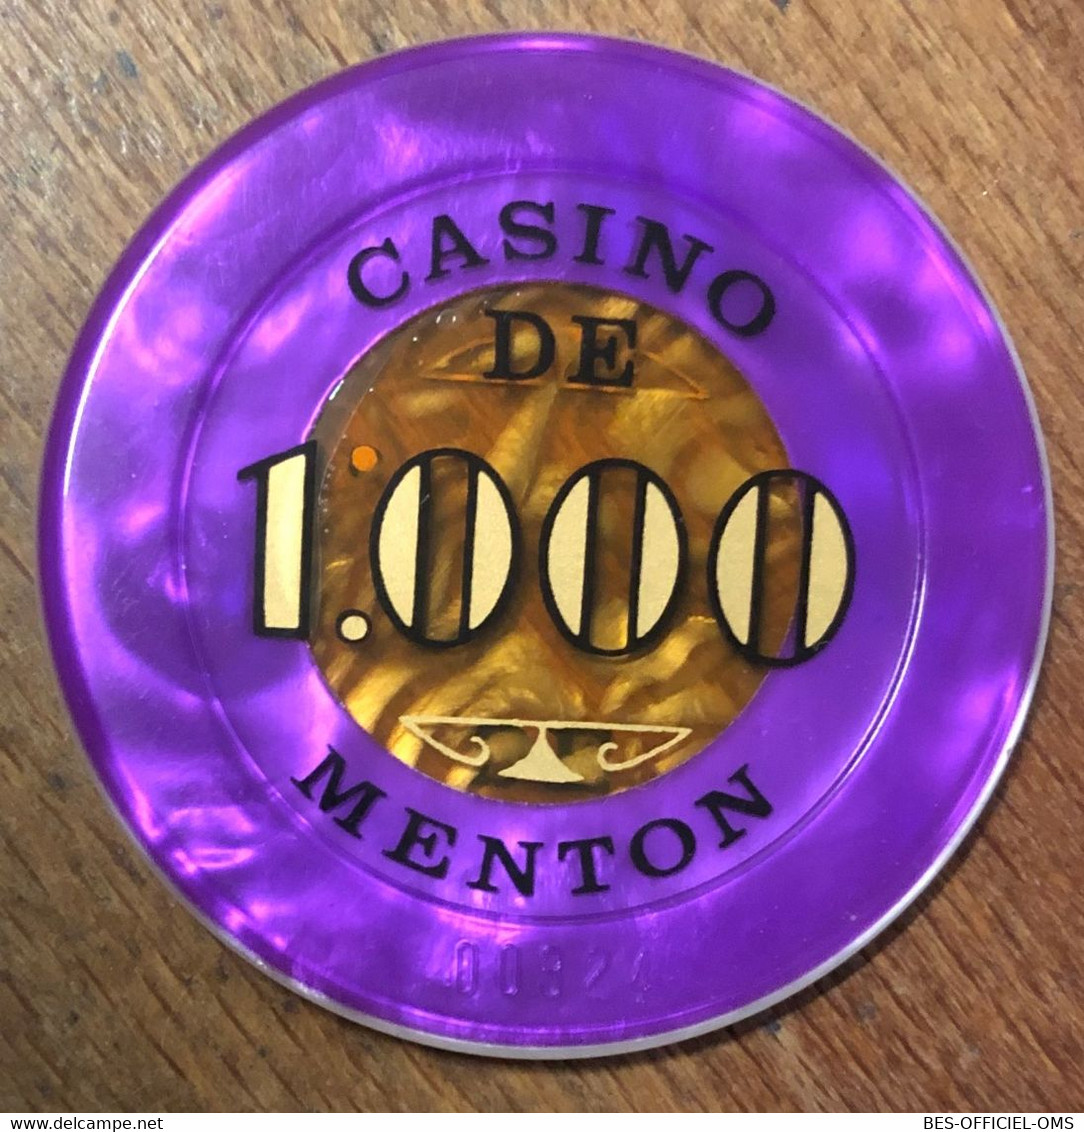 06 MENTON CASINO JETON DE 1.000 FRANCS N° 00324 CHIP COINS TOKENS GAMING - Casino